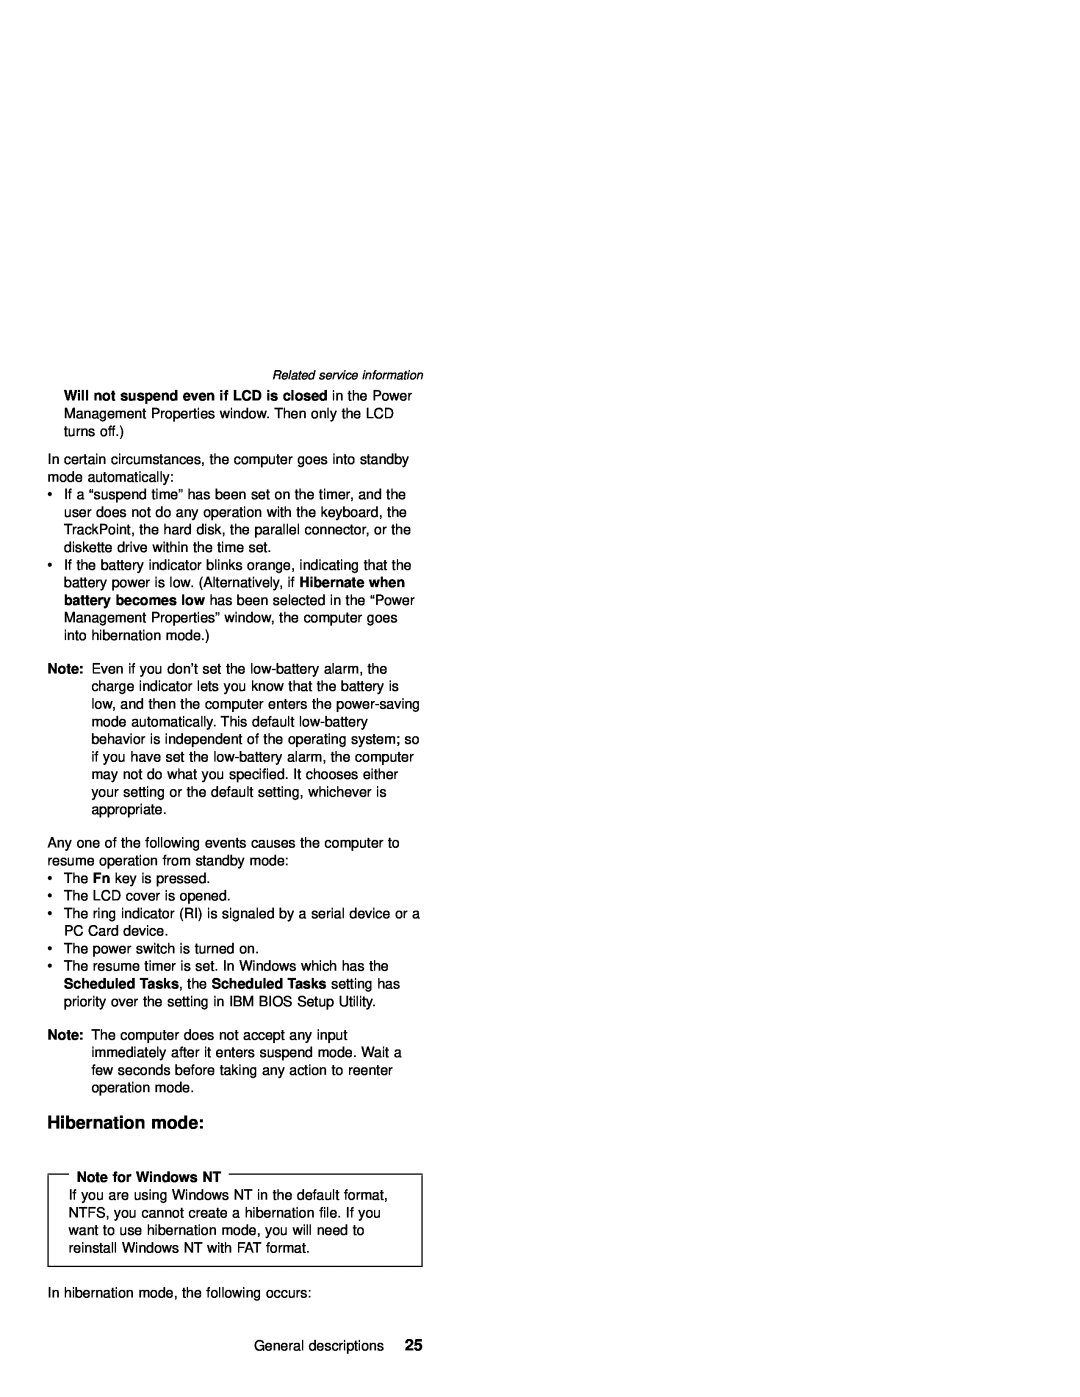 IBM MT 2632 manual Hibernation mode, Note for Windows NT 